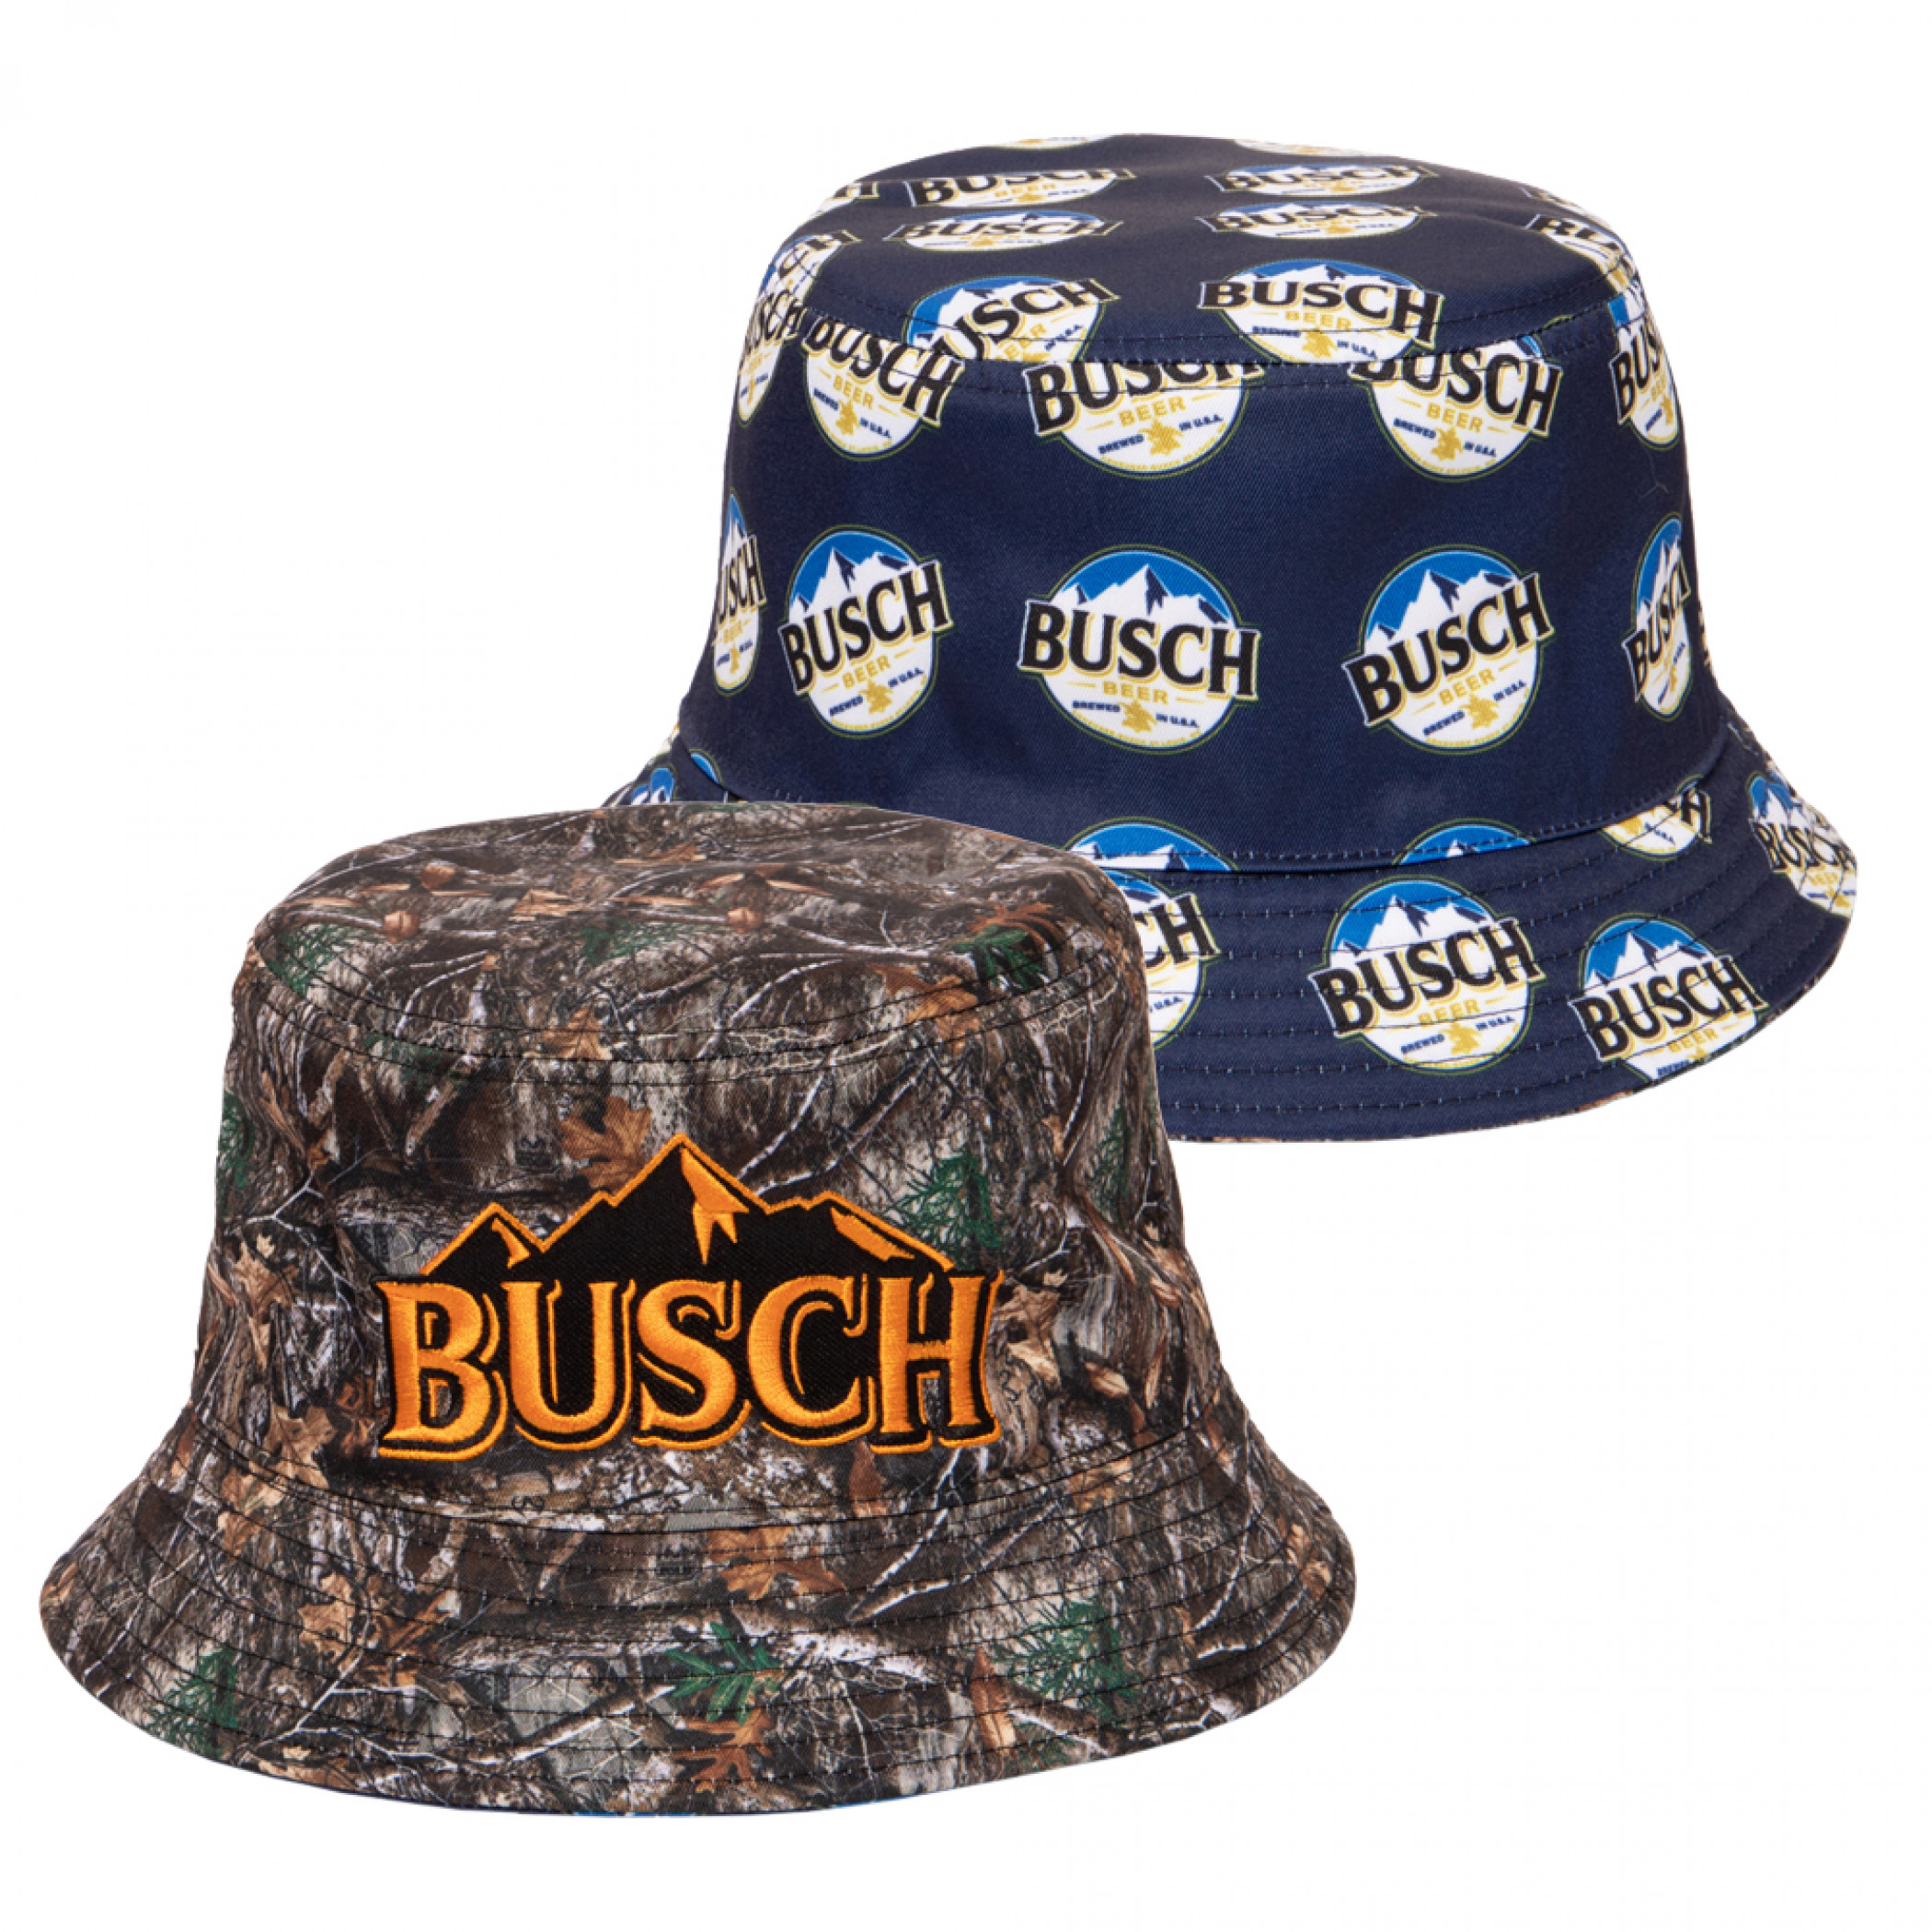 Busch Beer Label All Over Reversible Camo Text Bucket Hat